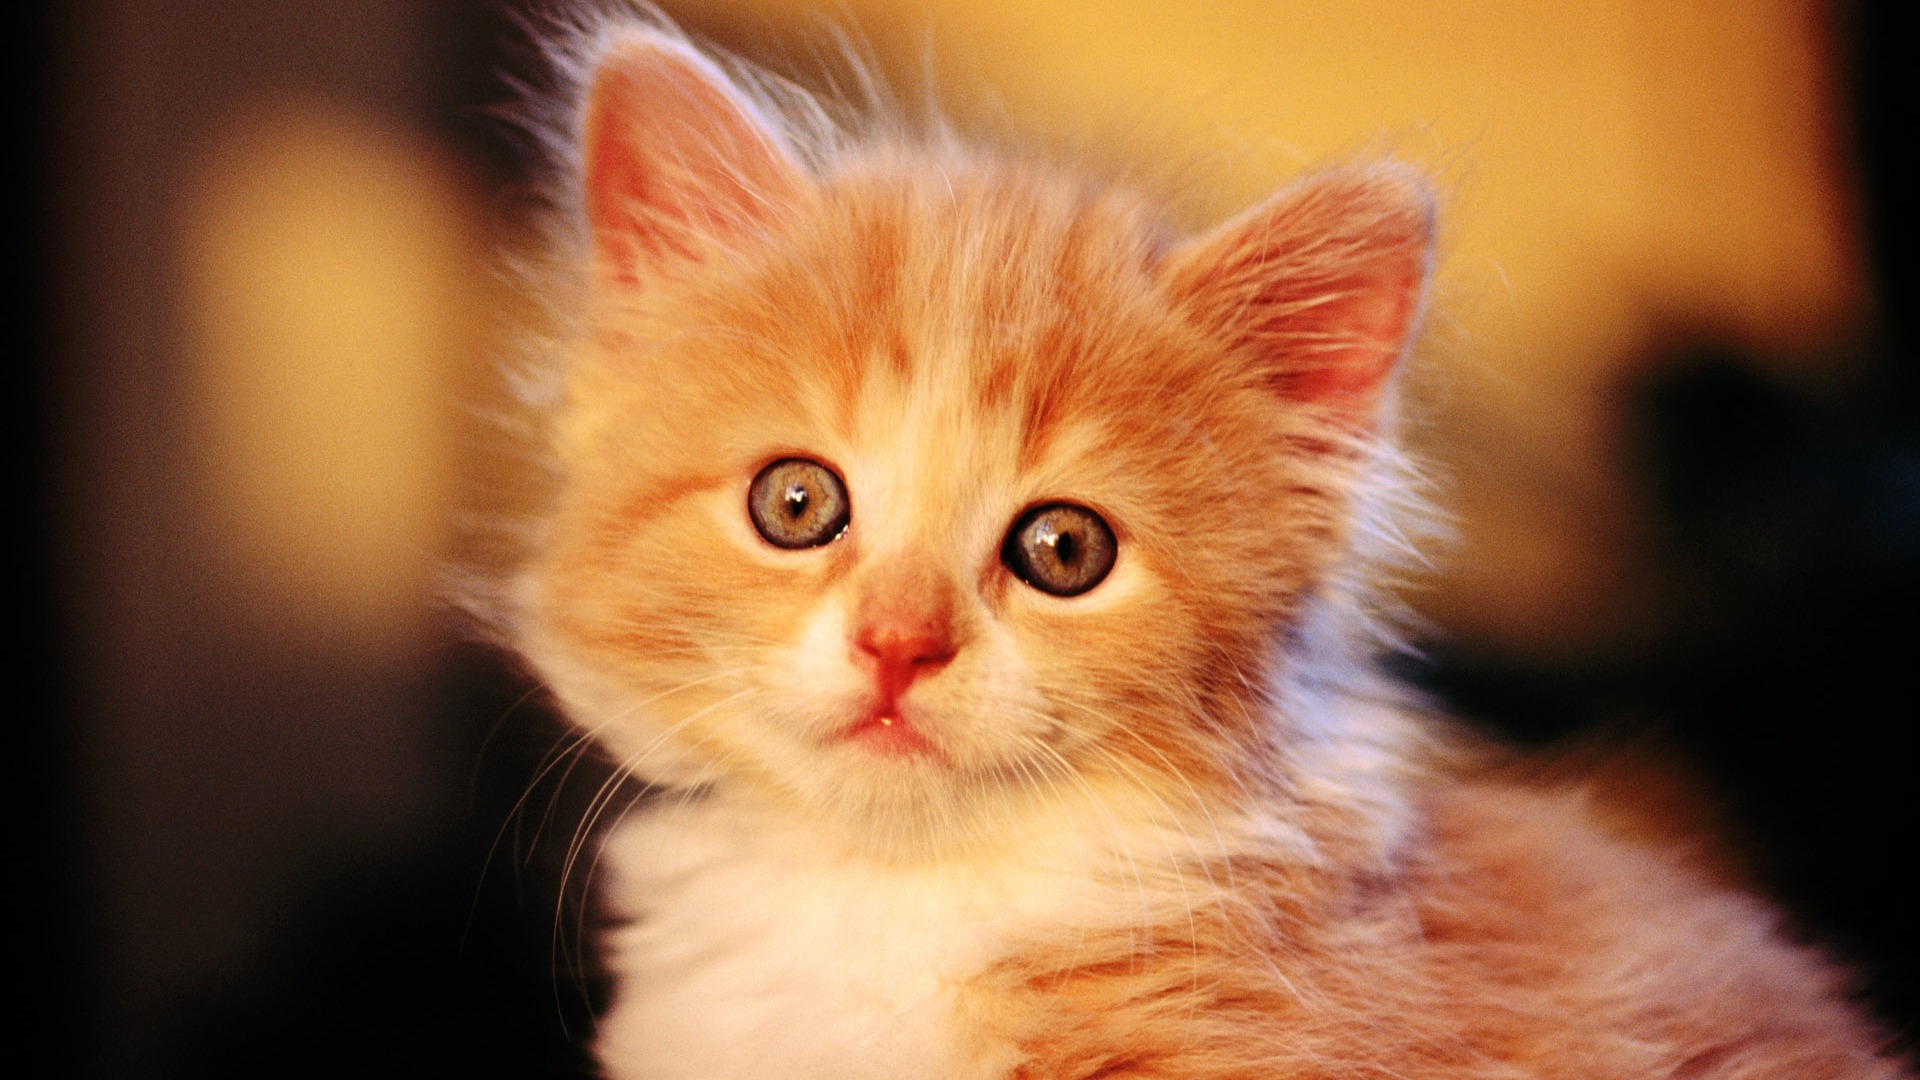 HD wallpaper cute cat photo #1 - 1920x1080